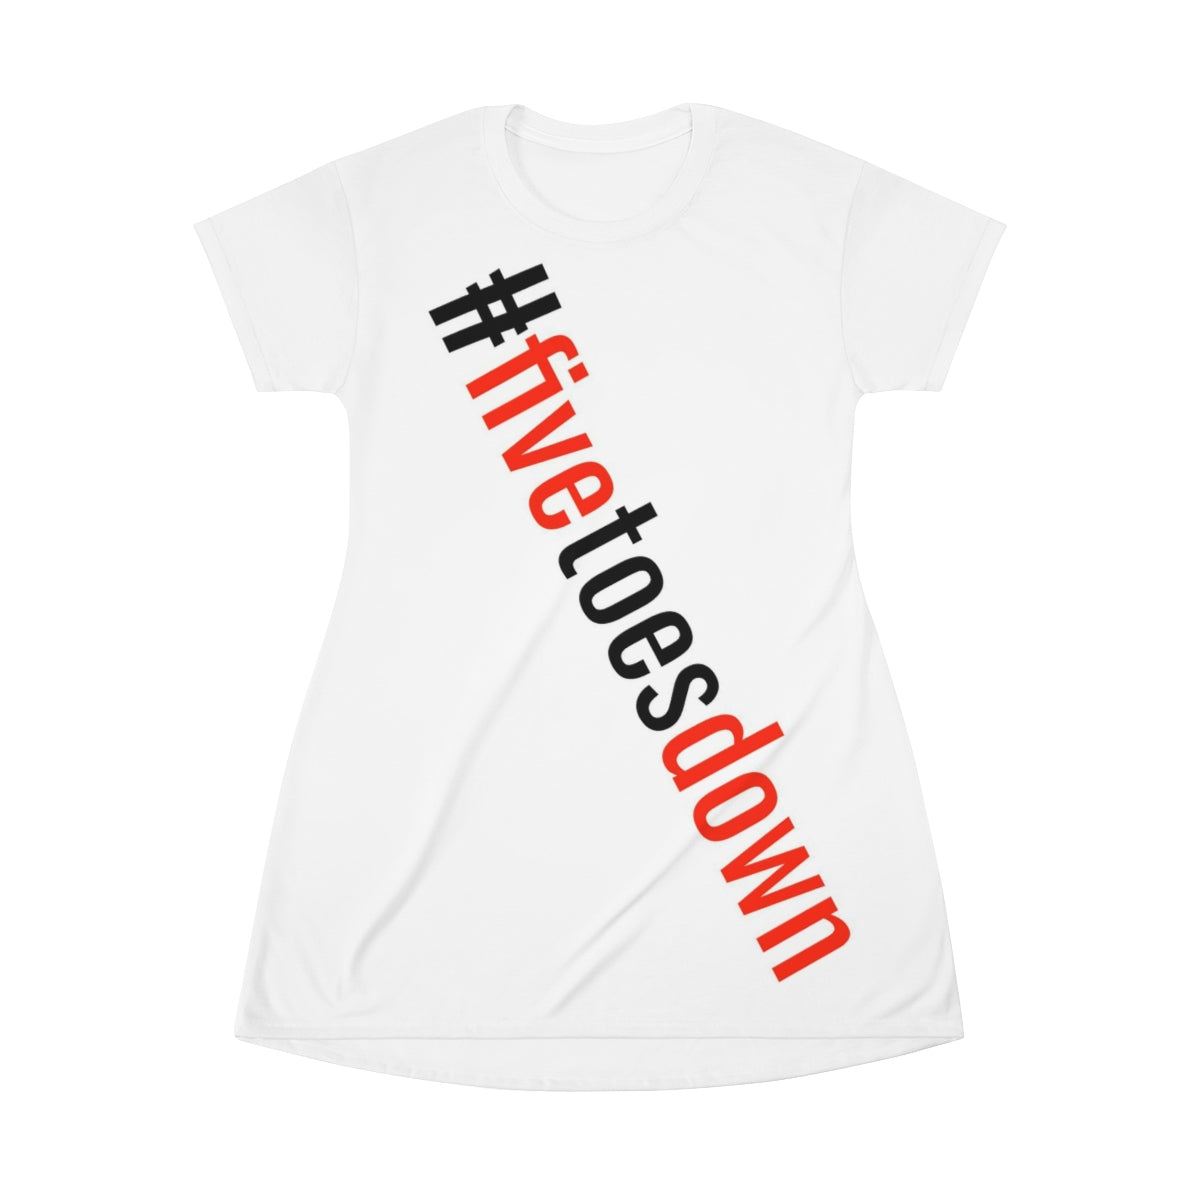 Five Toes Down Hashtag T-shirt Dress